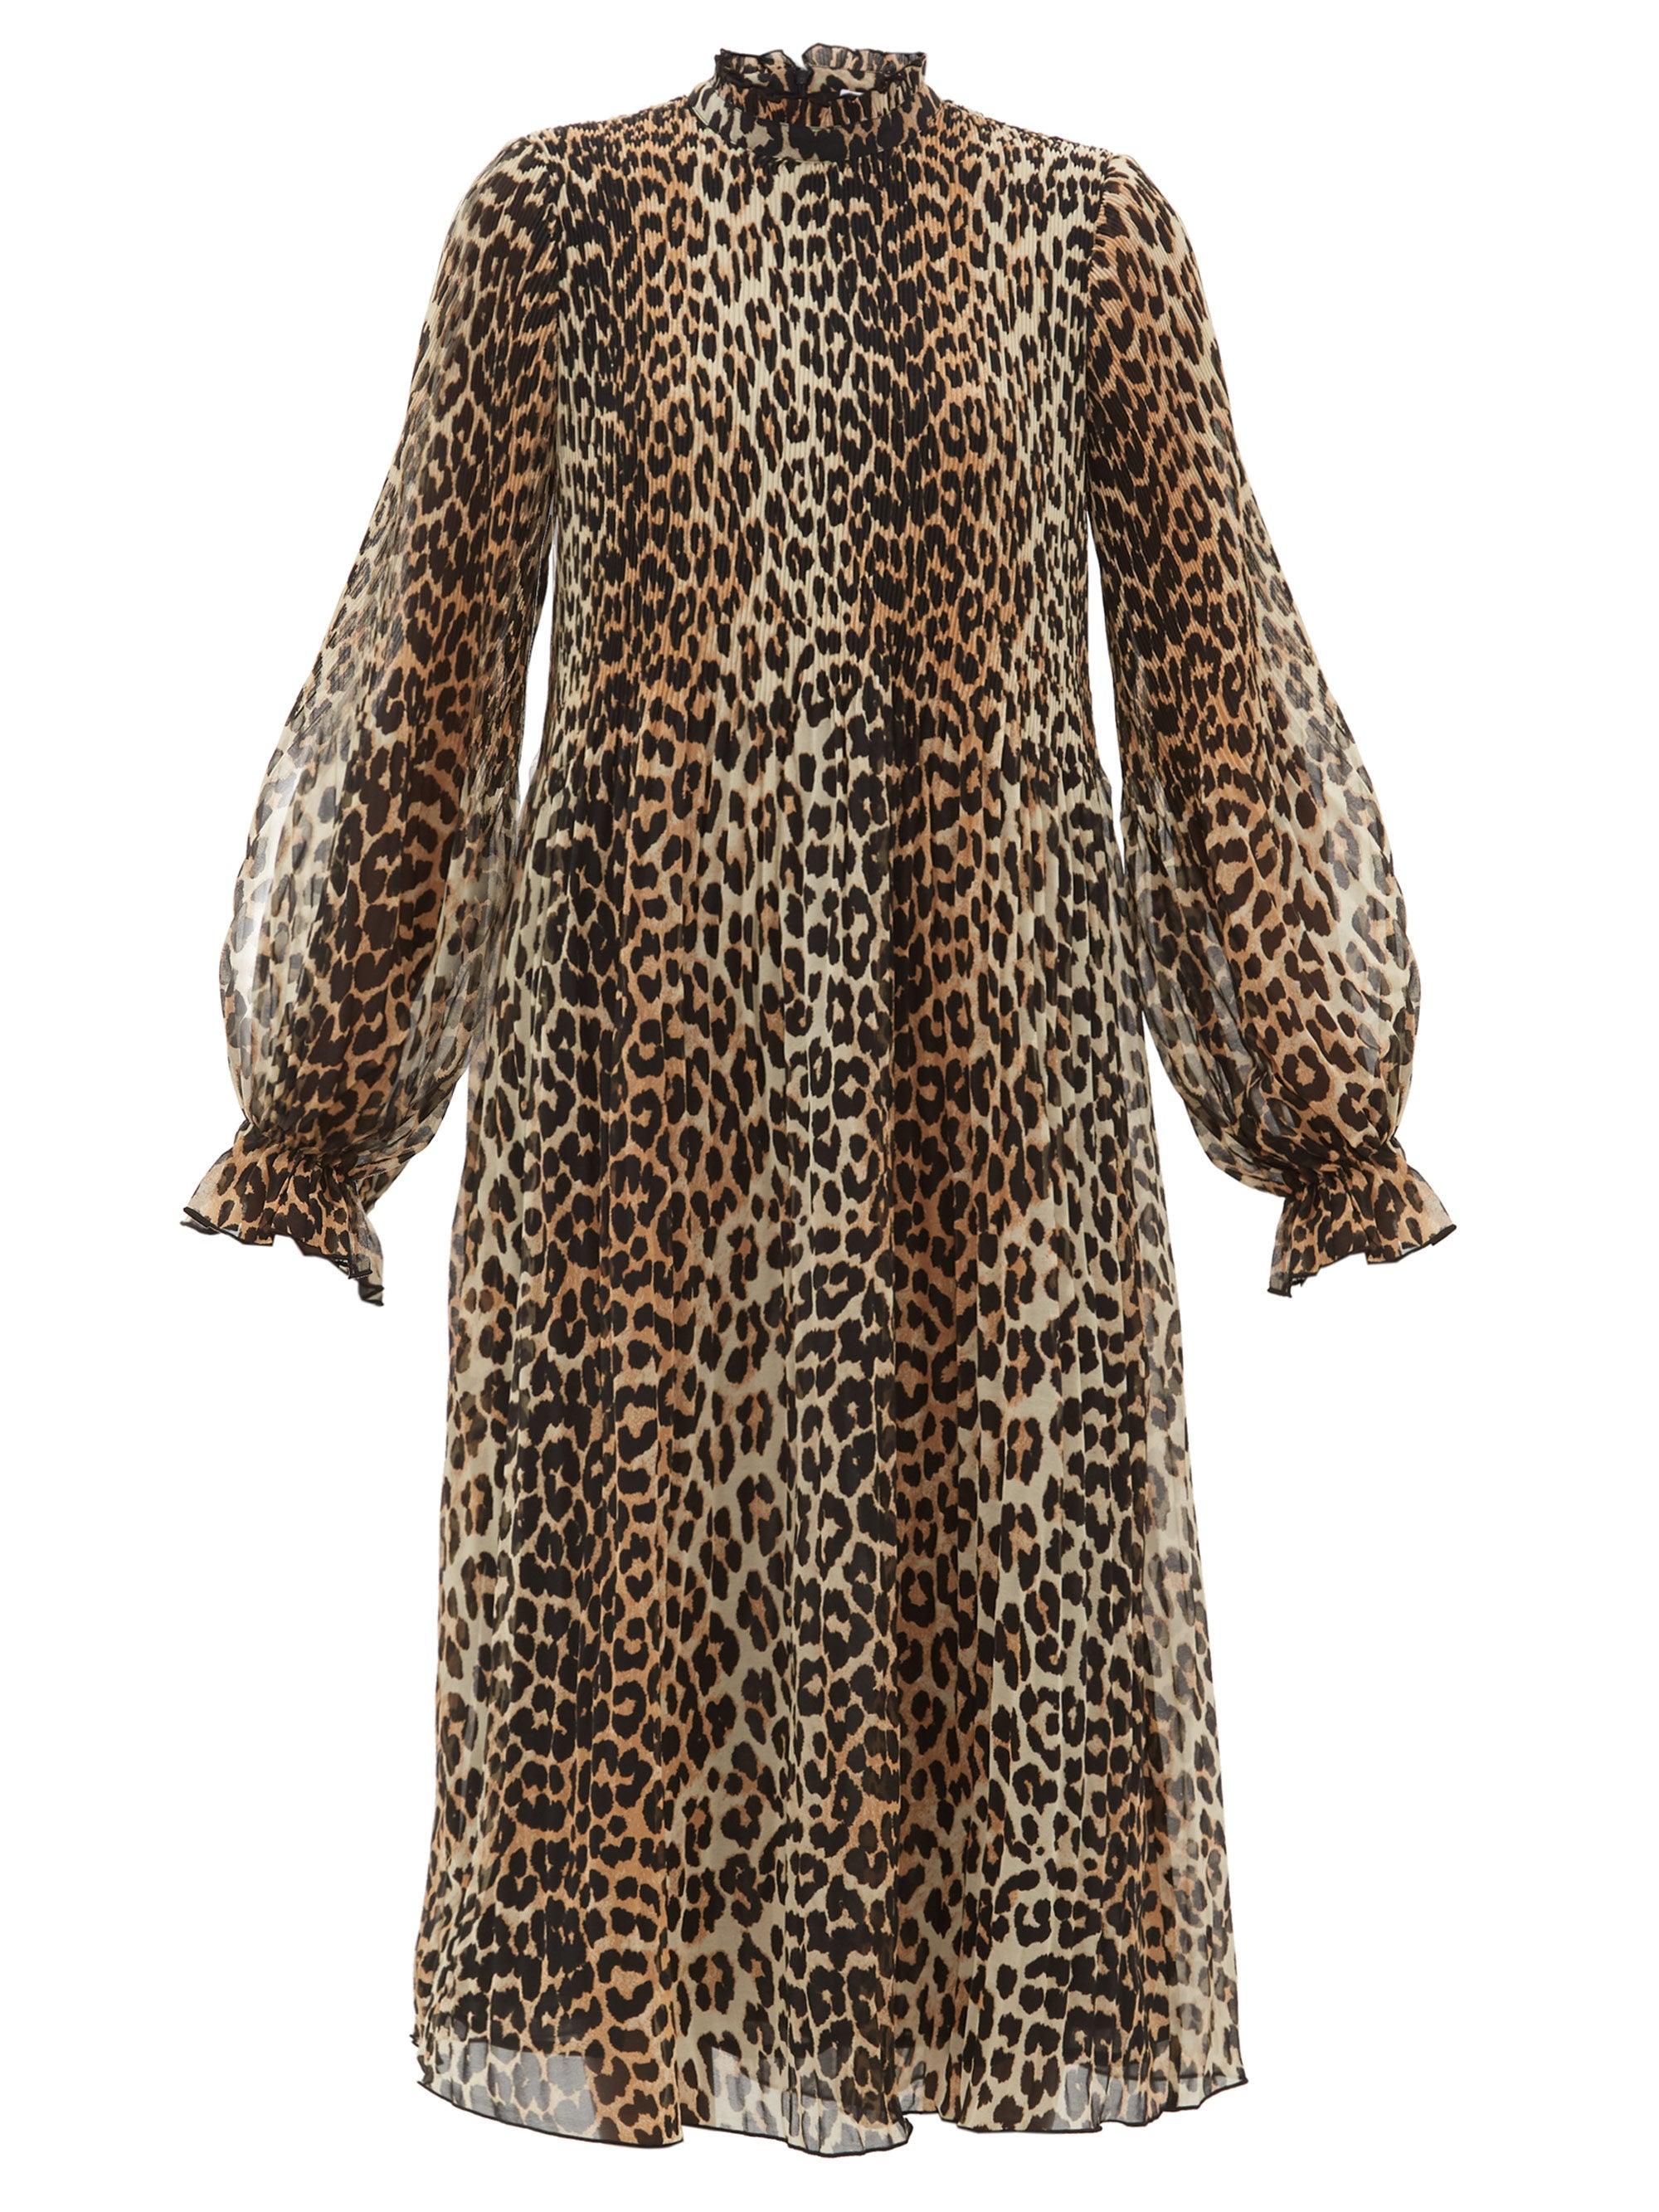 Ganni Leopard-print Plissé-georgette Dress in Brown | Lyst